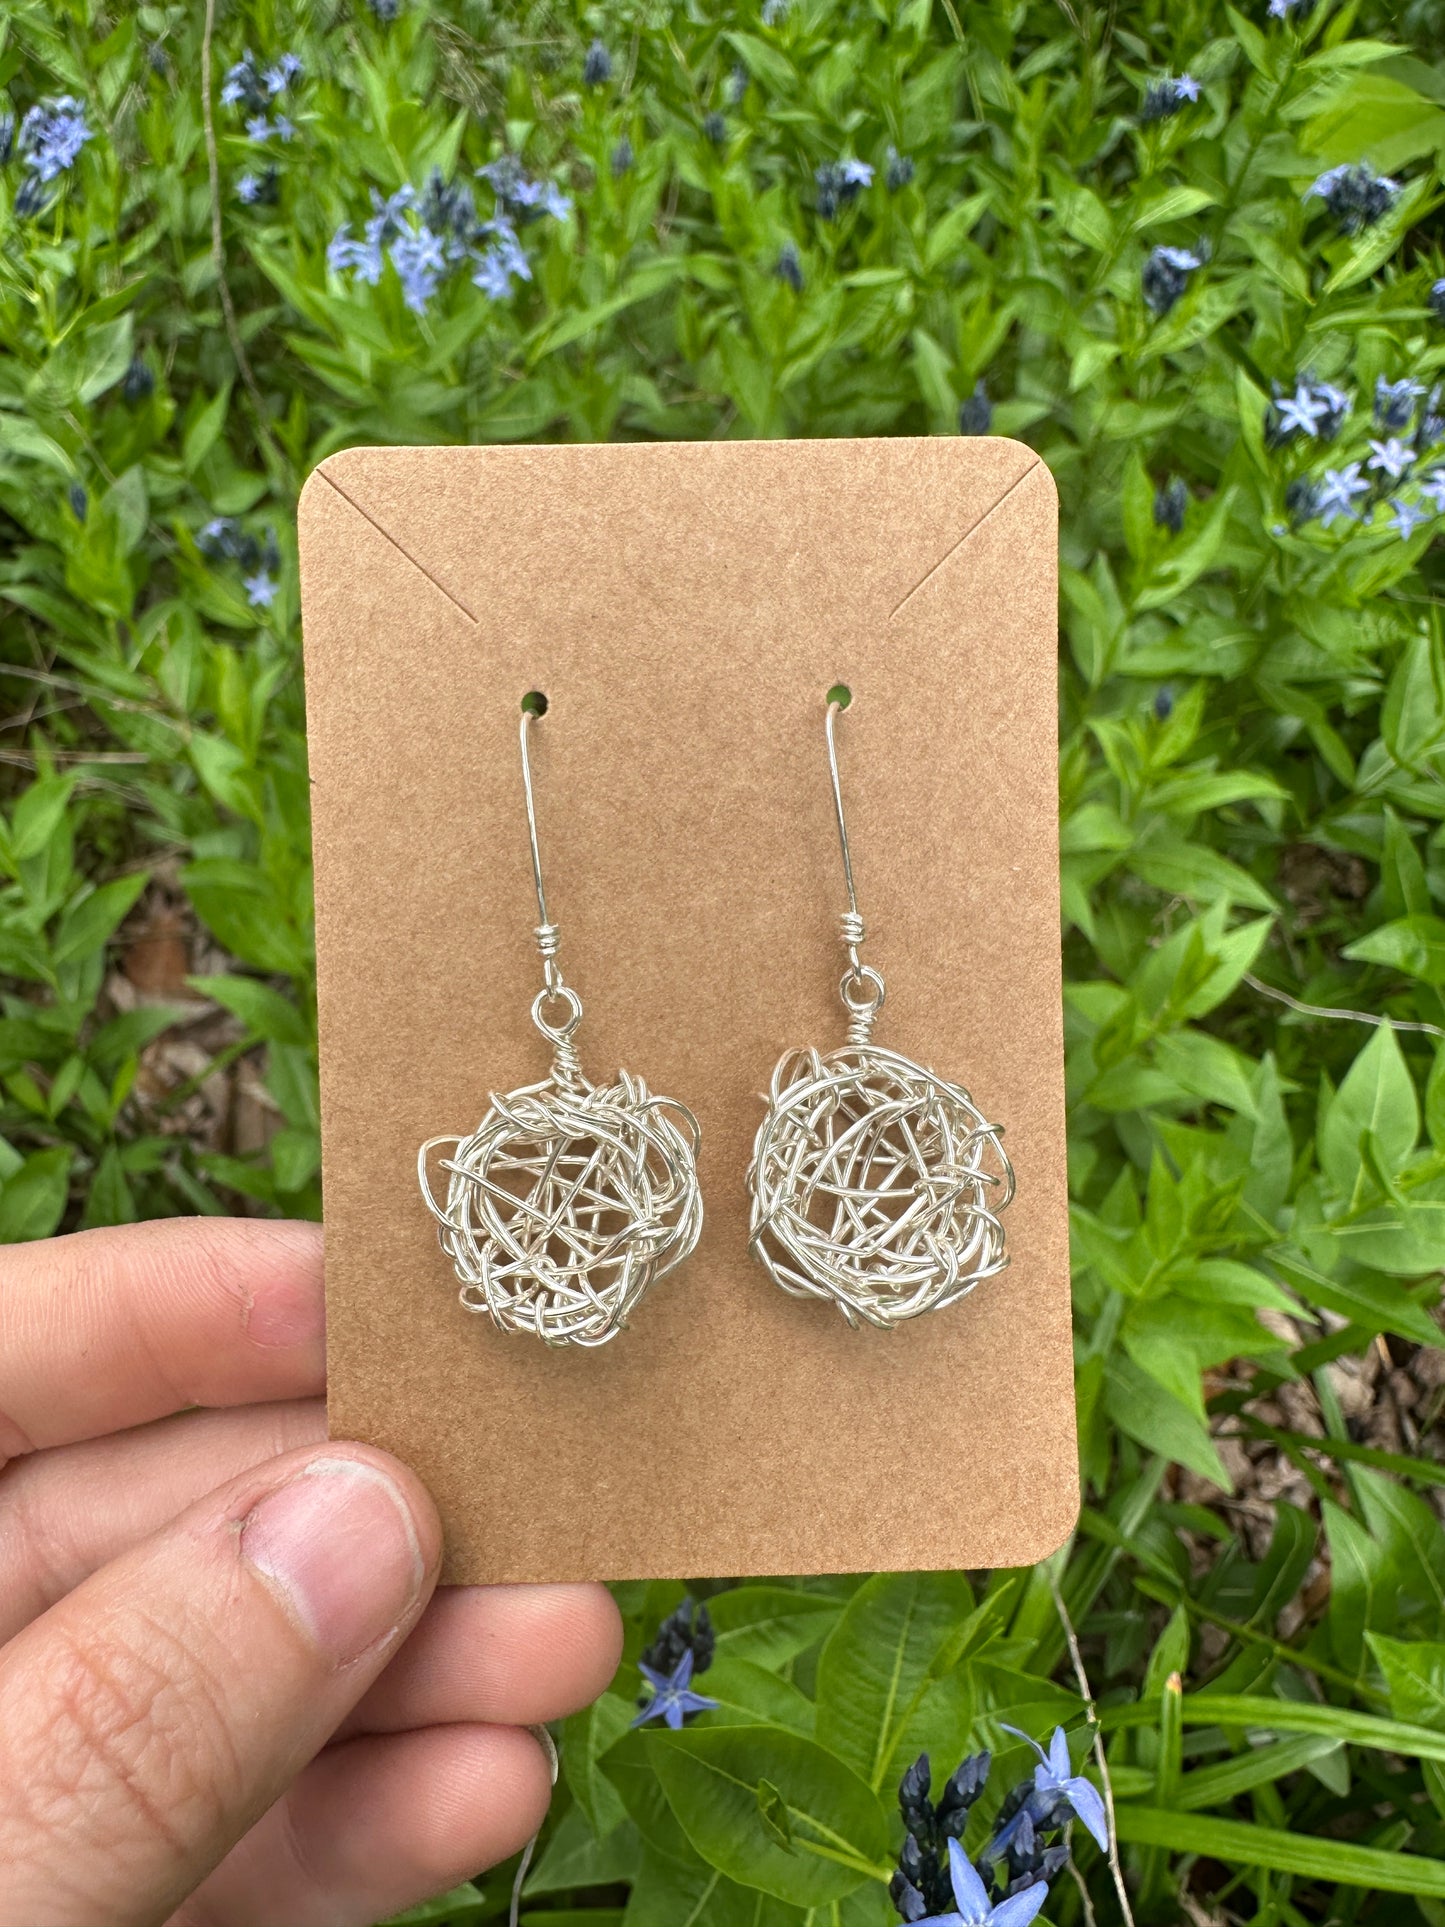 Nest earrings